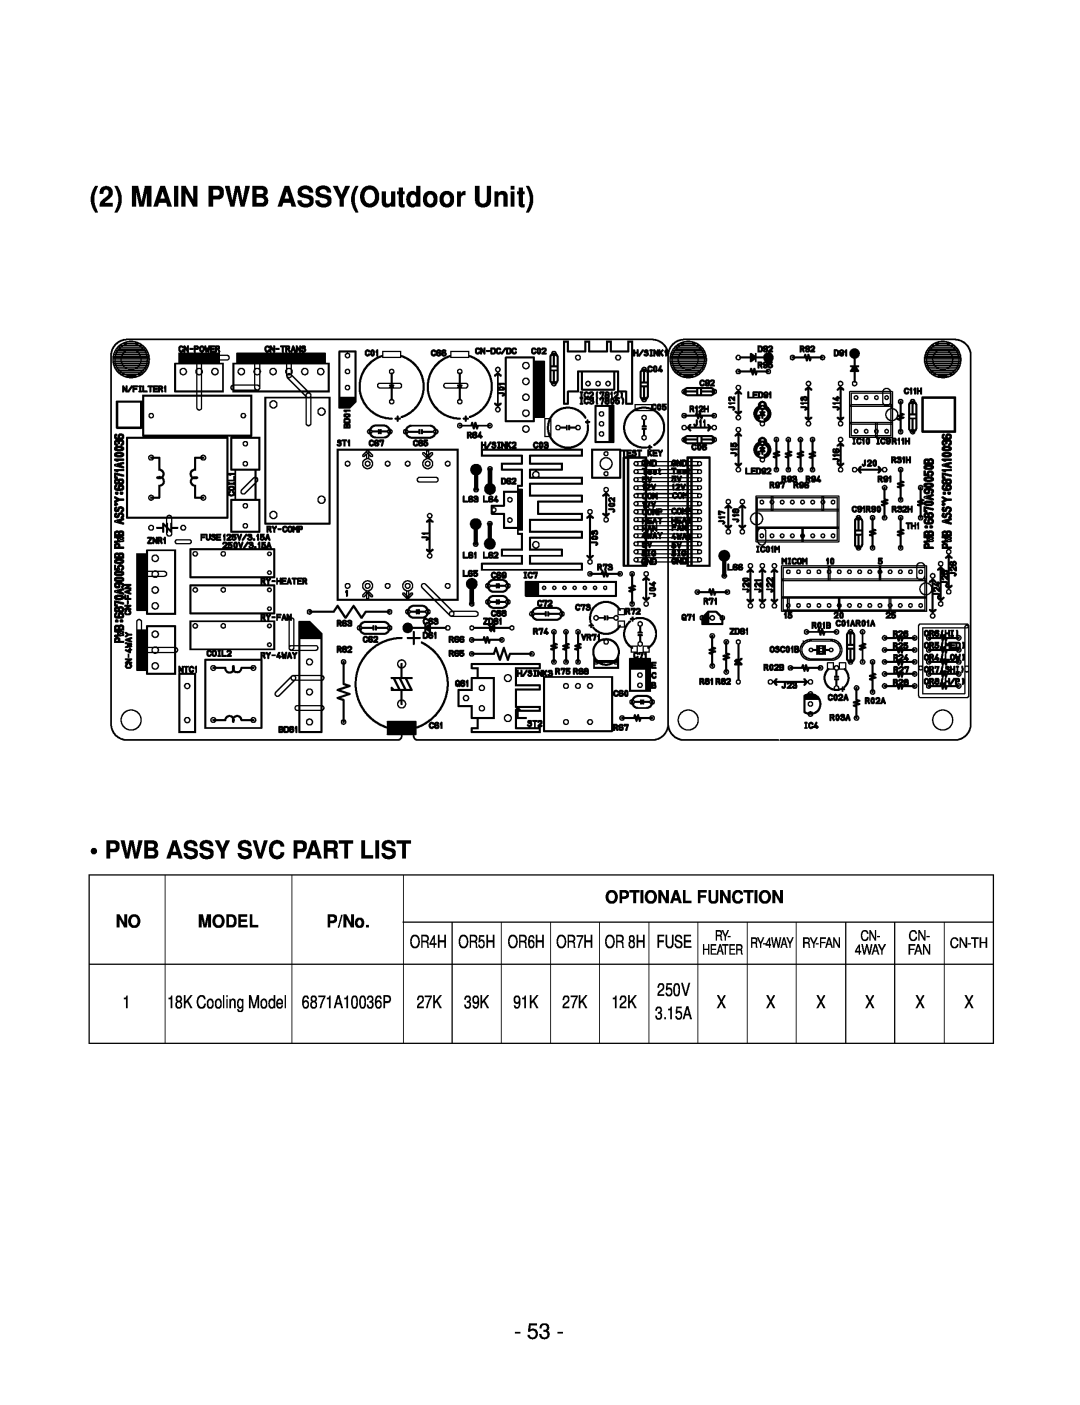 LG Electronics LSC183VMA service manual MAIN PWB ASSYOutdoor Unit, Pwb Assy Svc Part List, Optional Function 